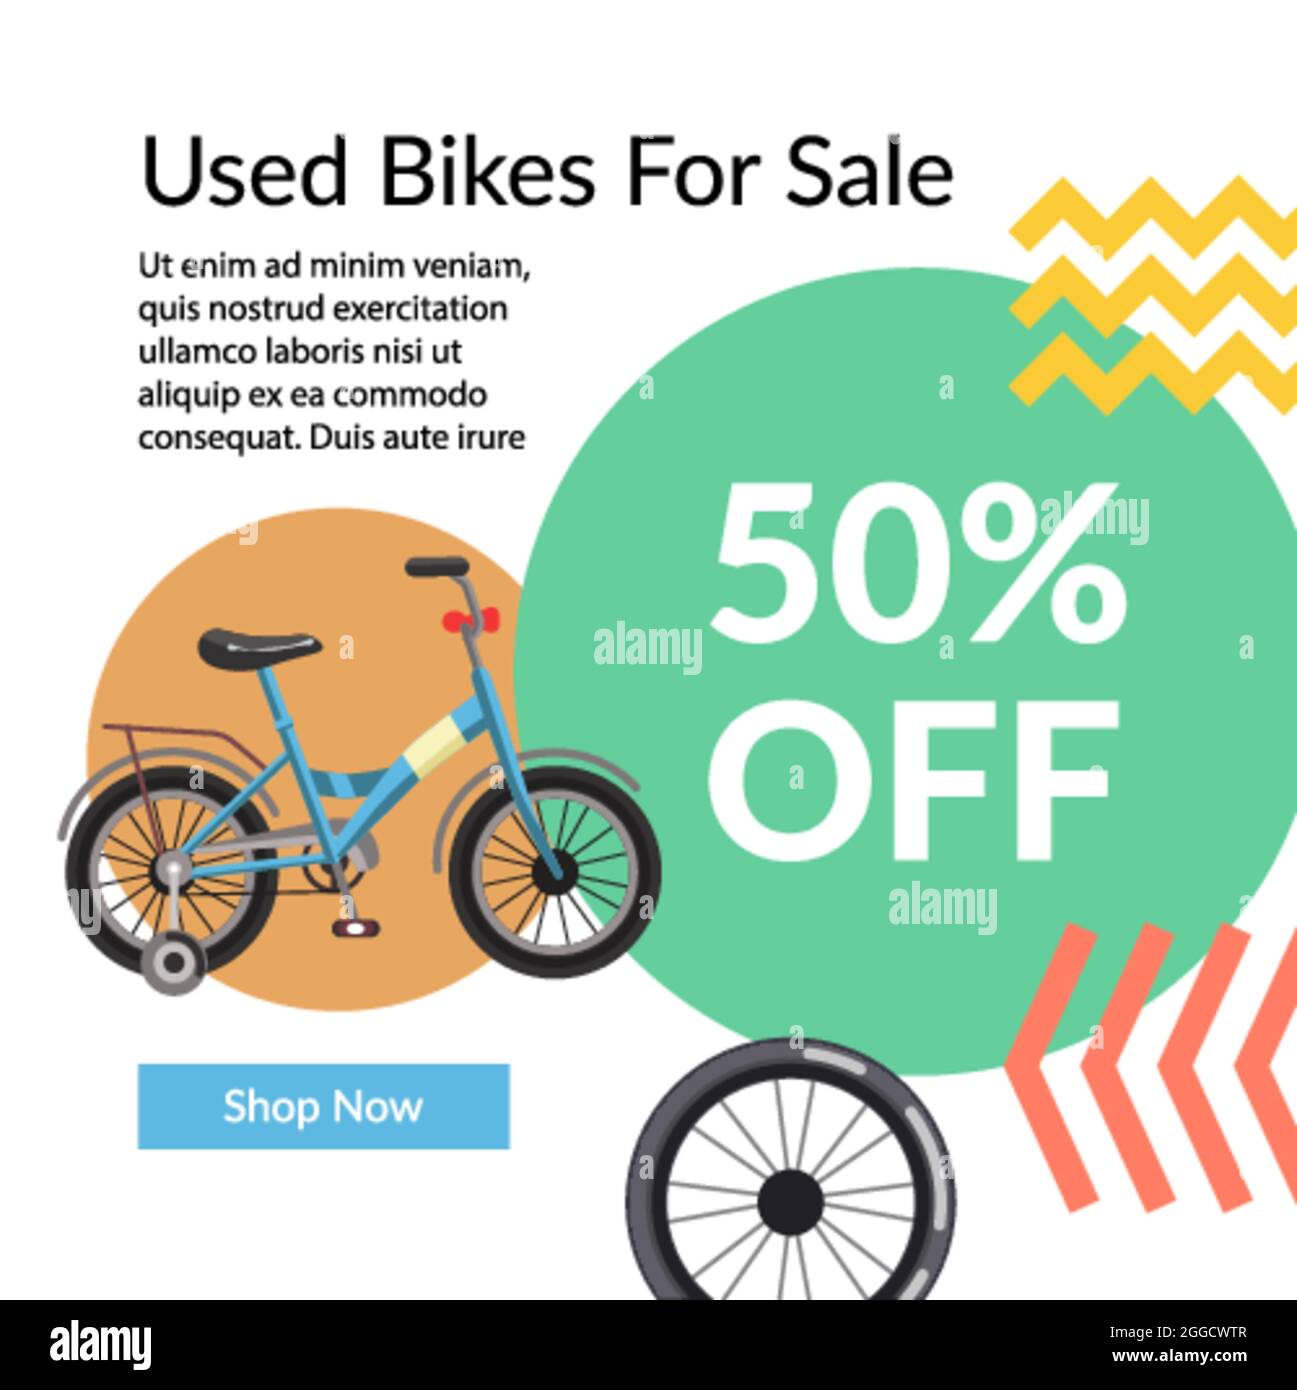 second bike sales